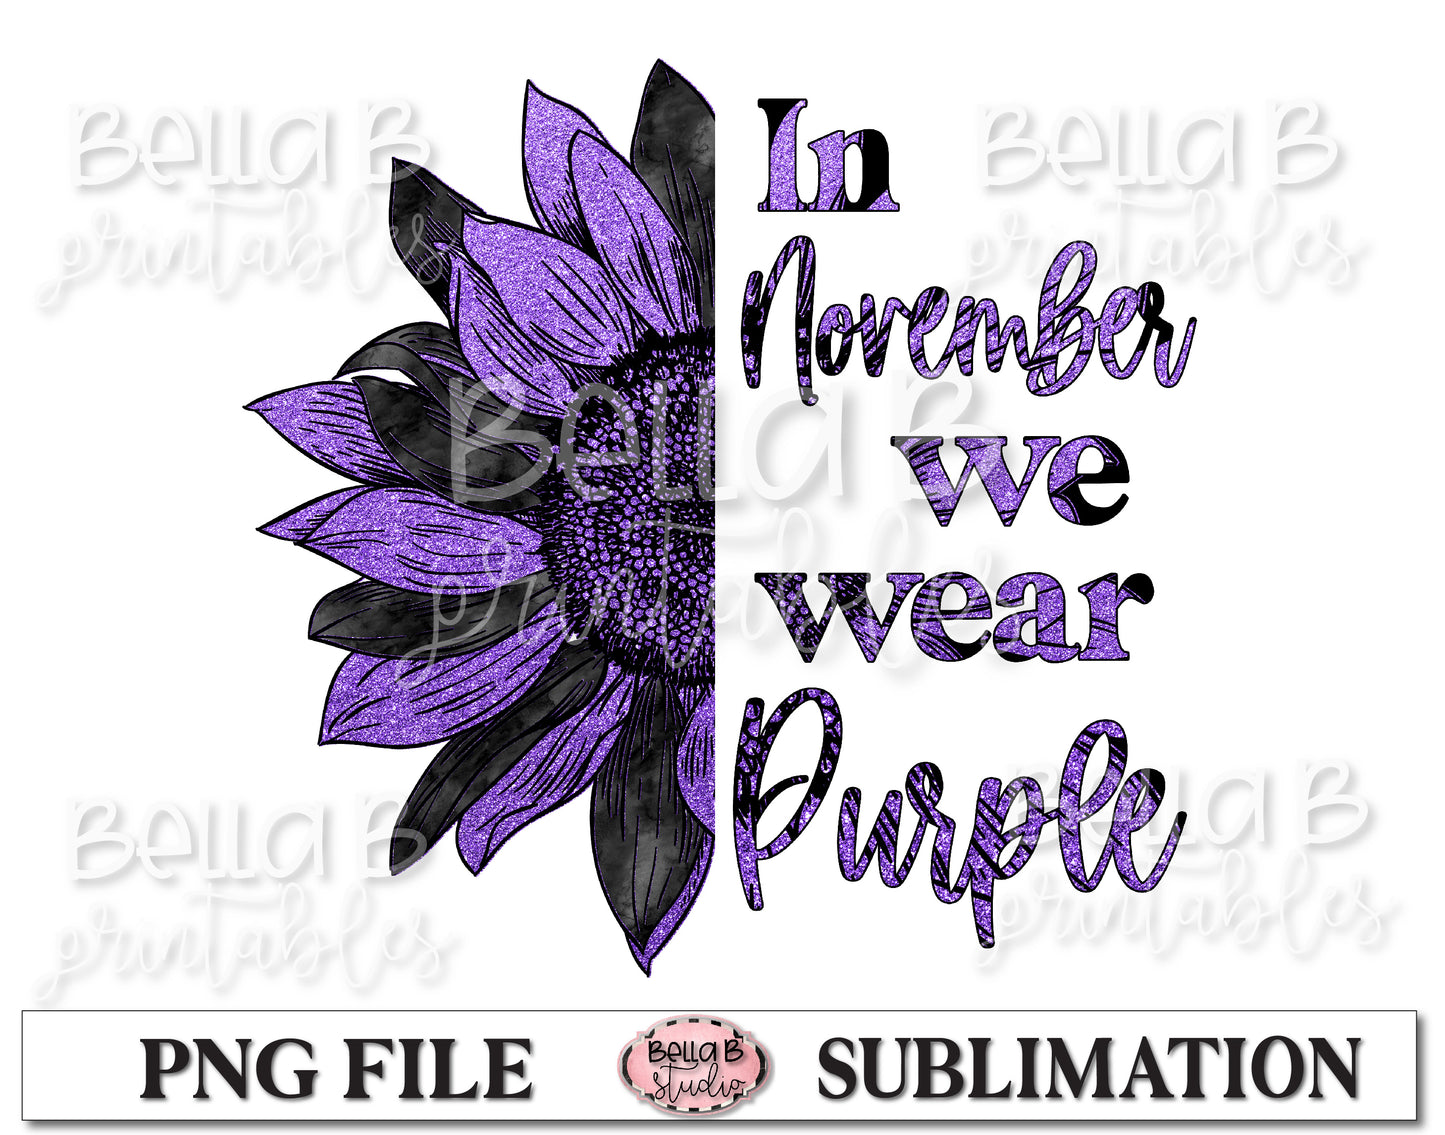 Sunflower Epilepsy Awareness Month Sublimation Design, In November We Wear Purple